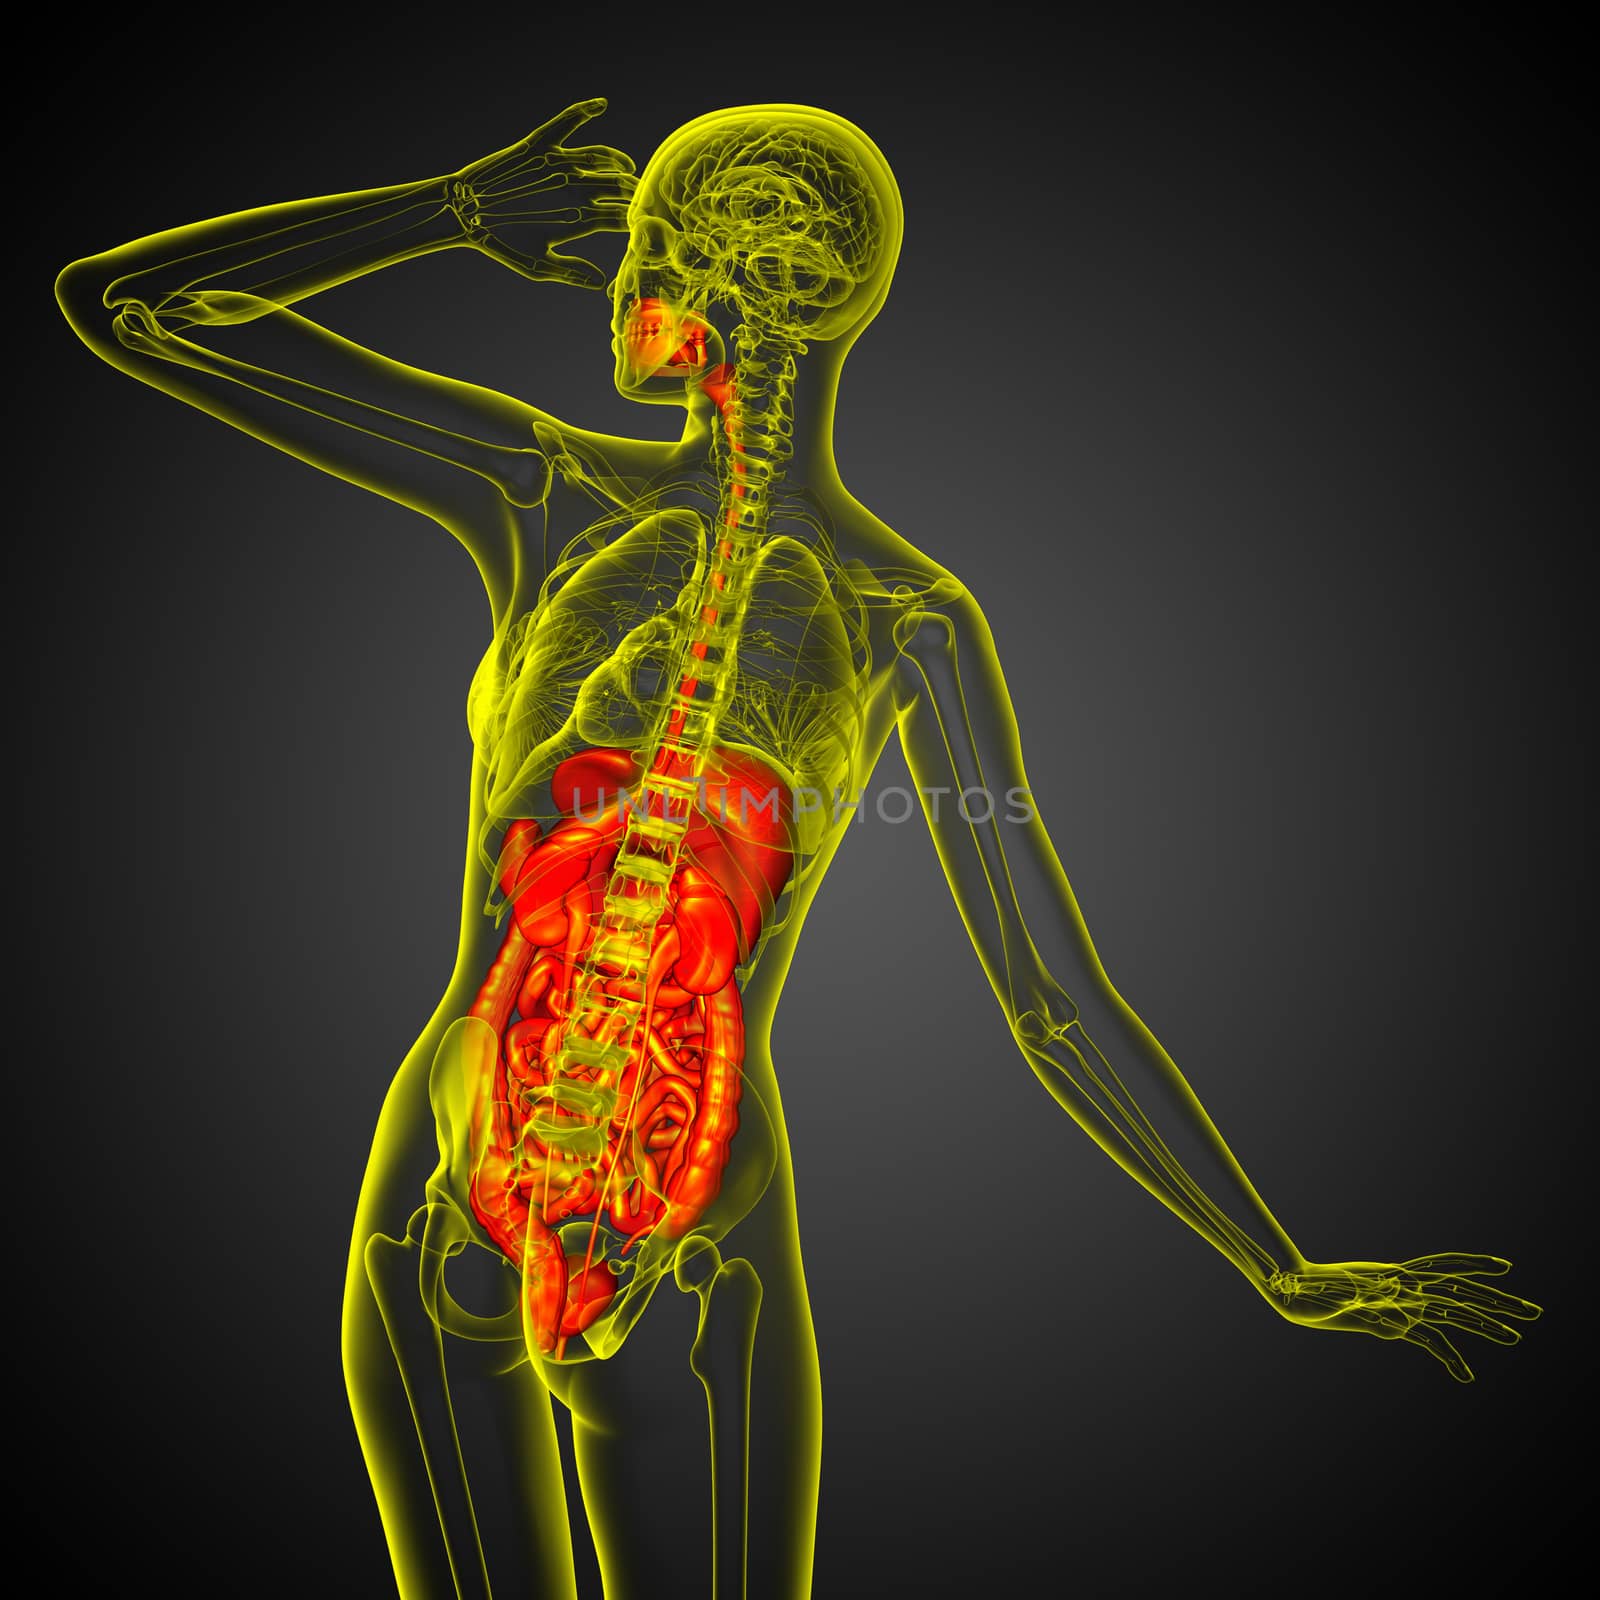 3d render medical illustration of the human digestive system - back view